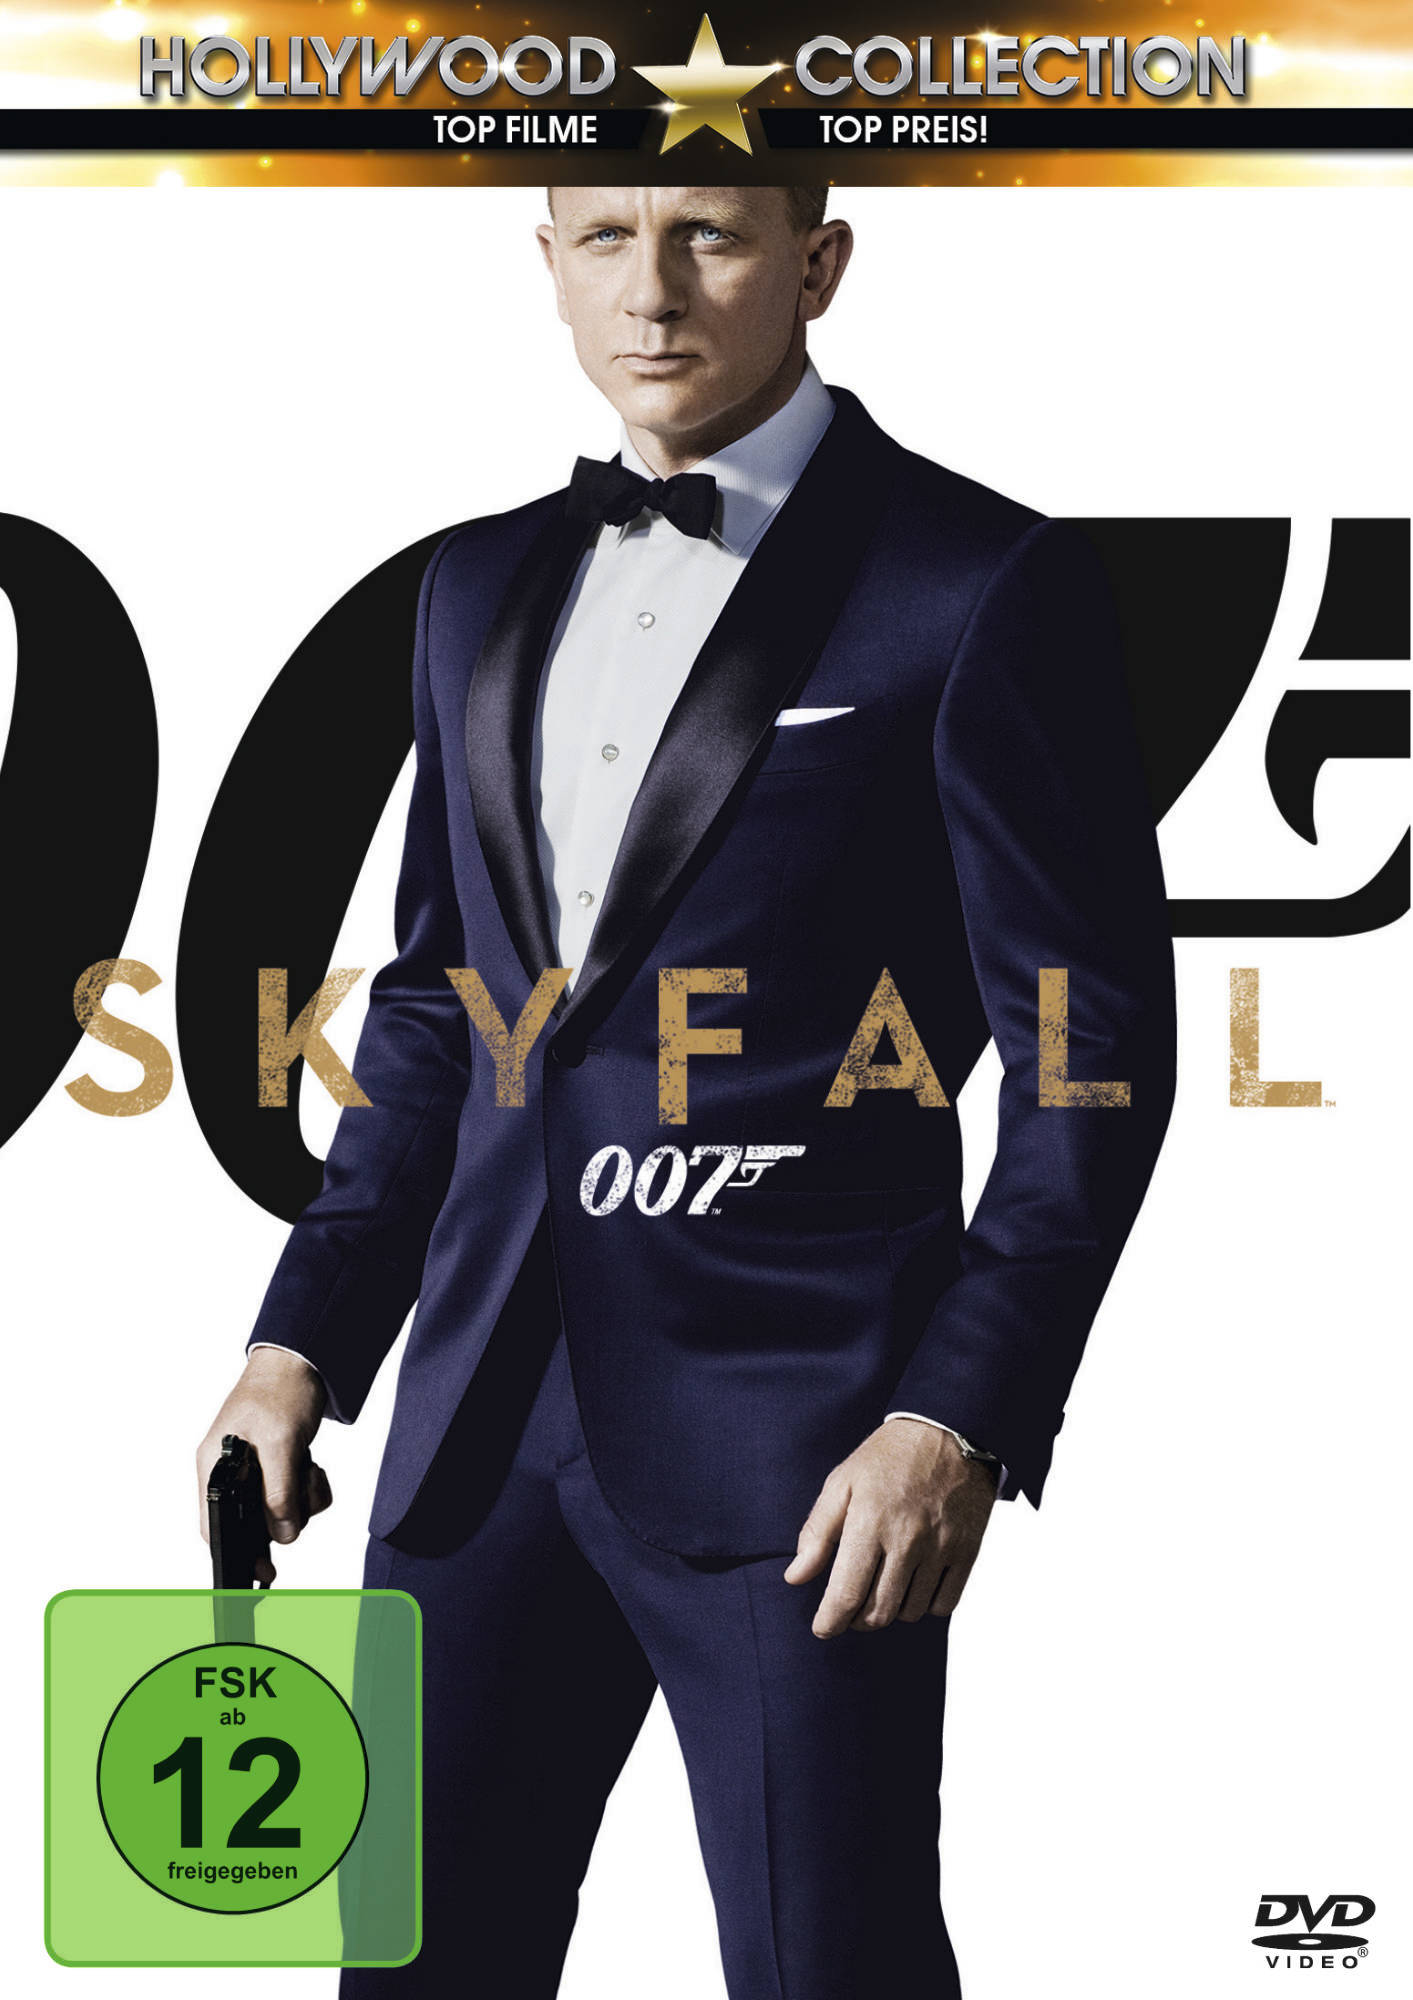 James Bond 007 DVD Skyfall 